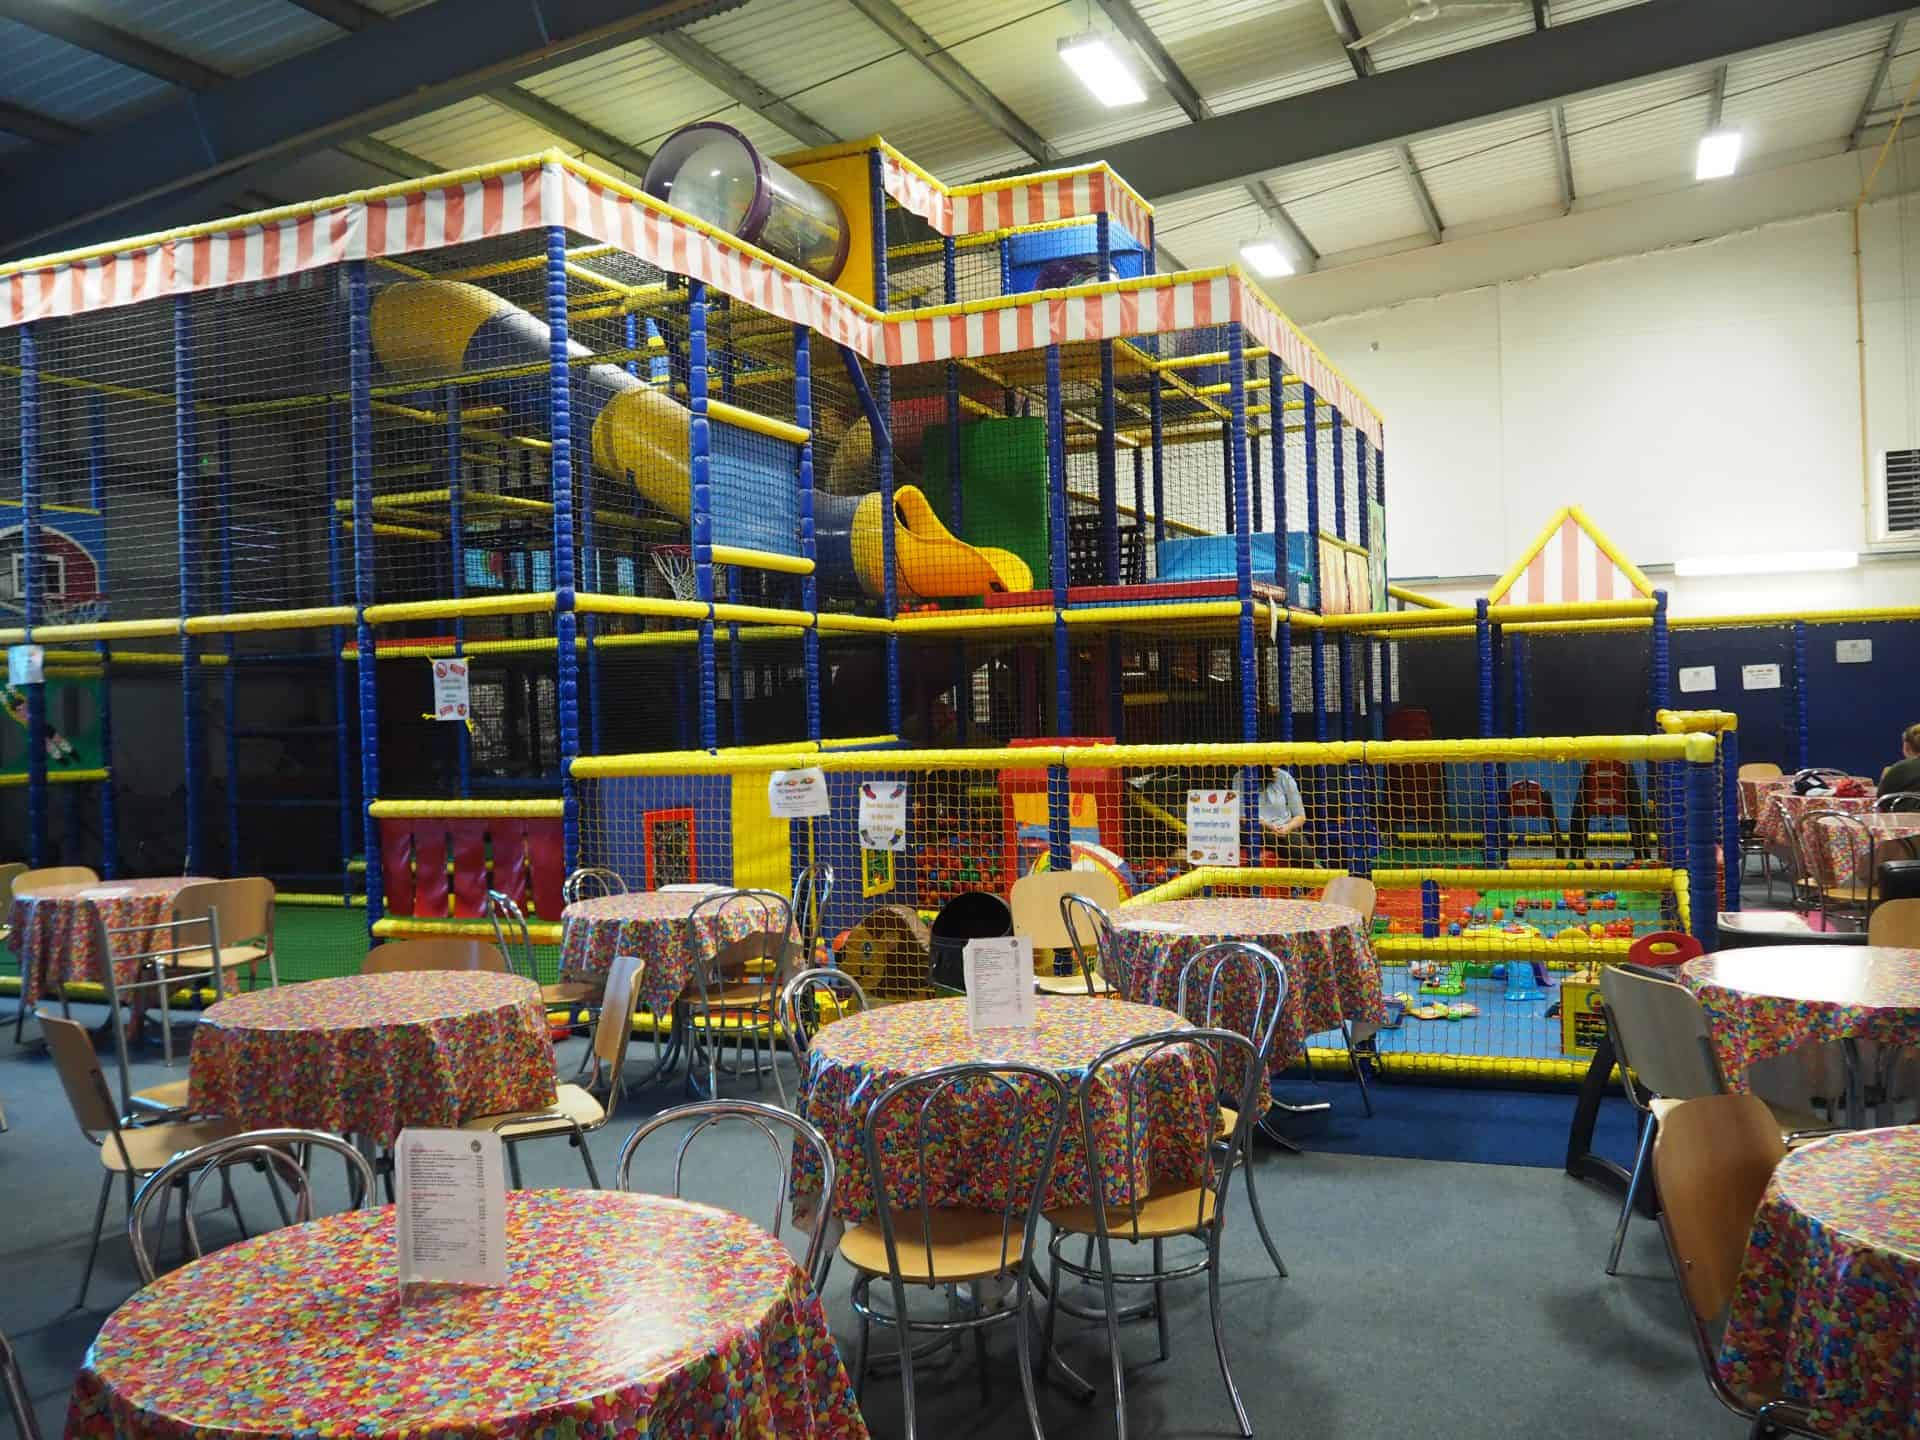 The Big Top Fun Centre in UK